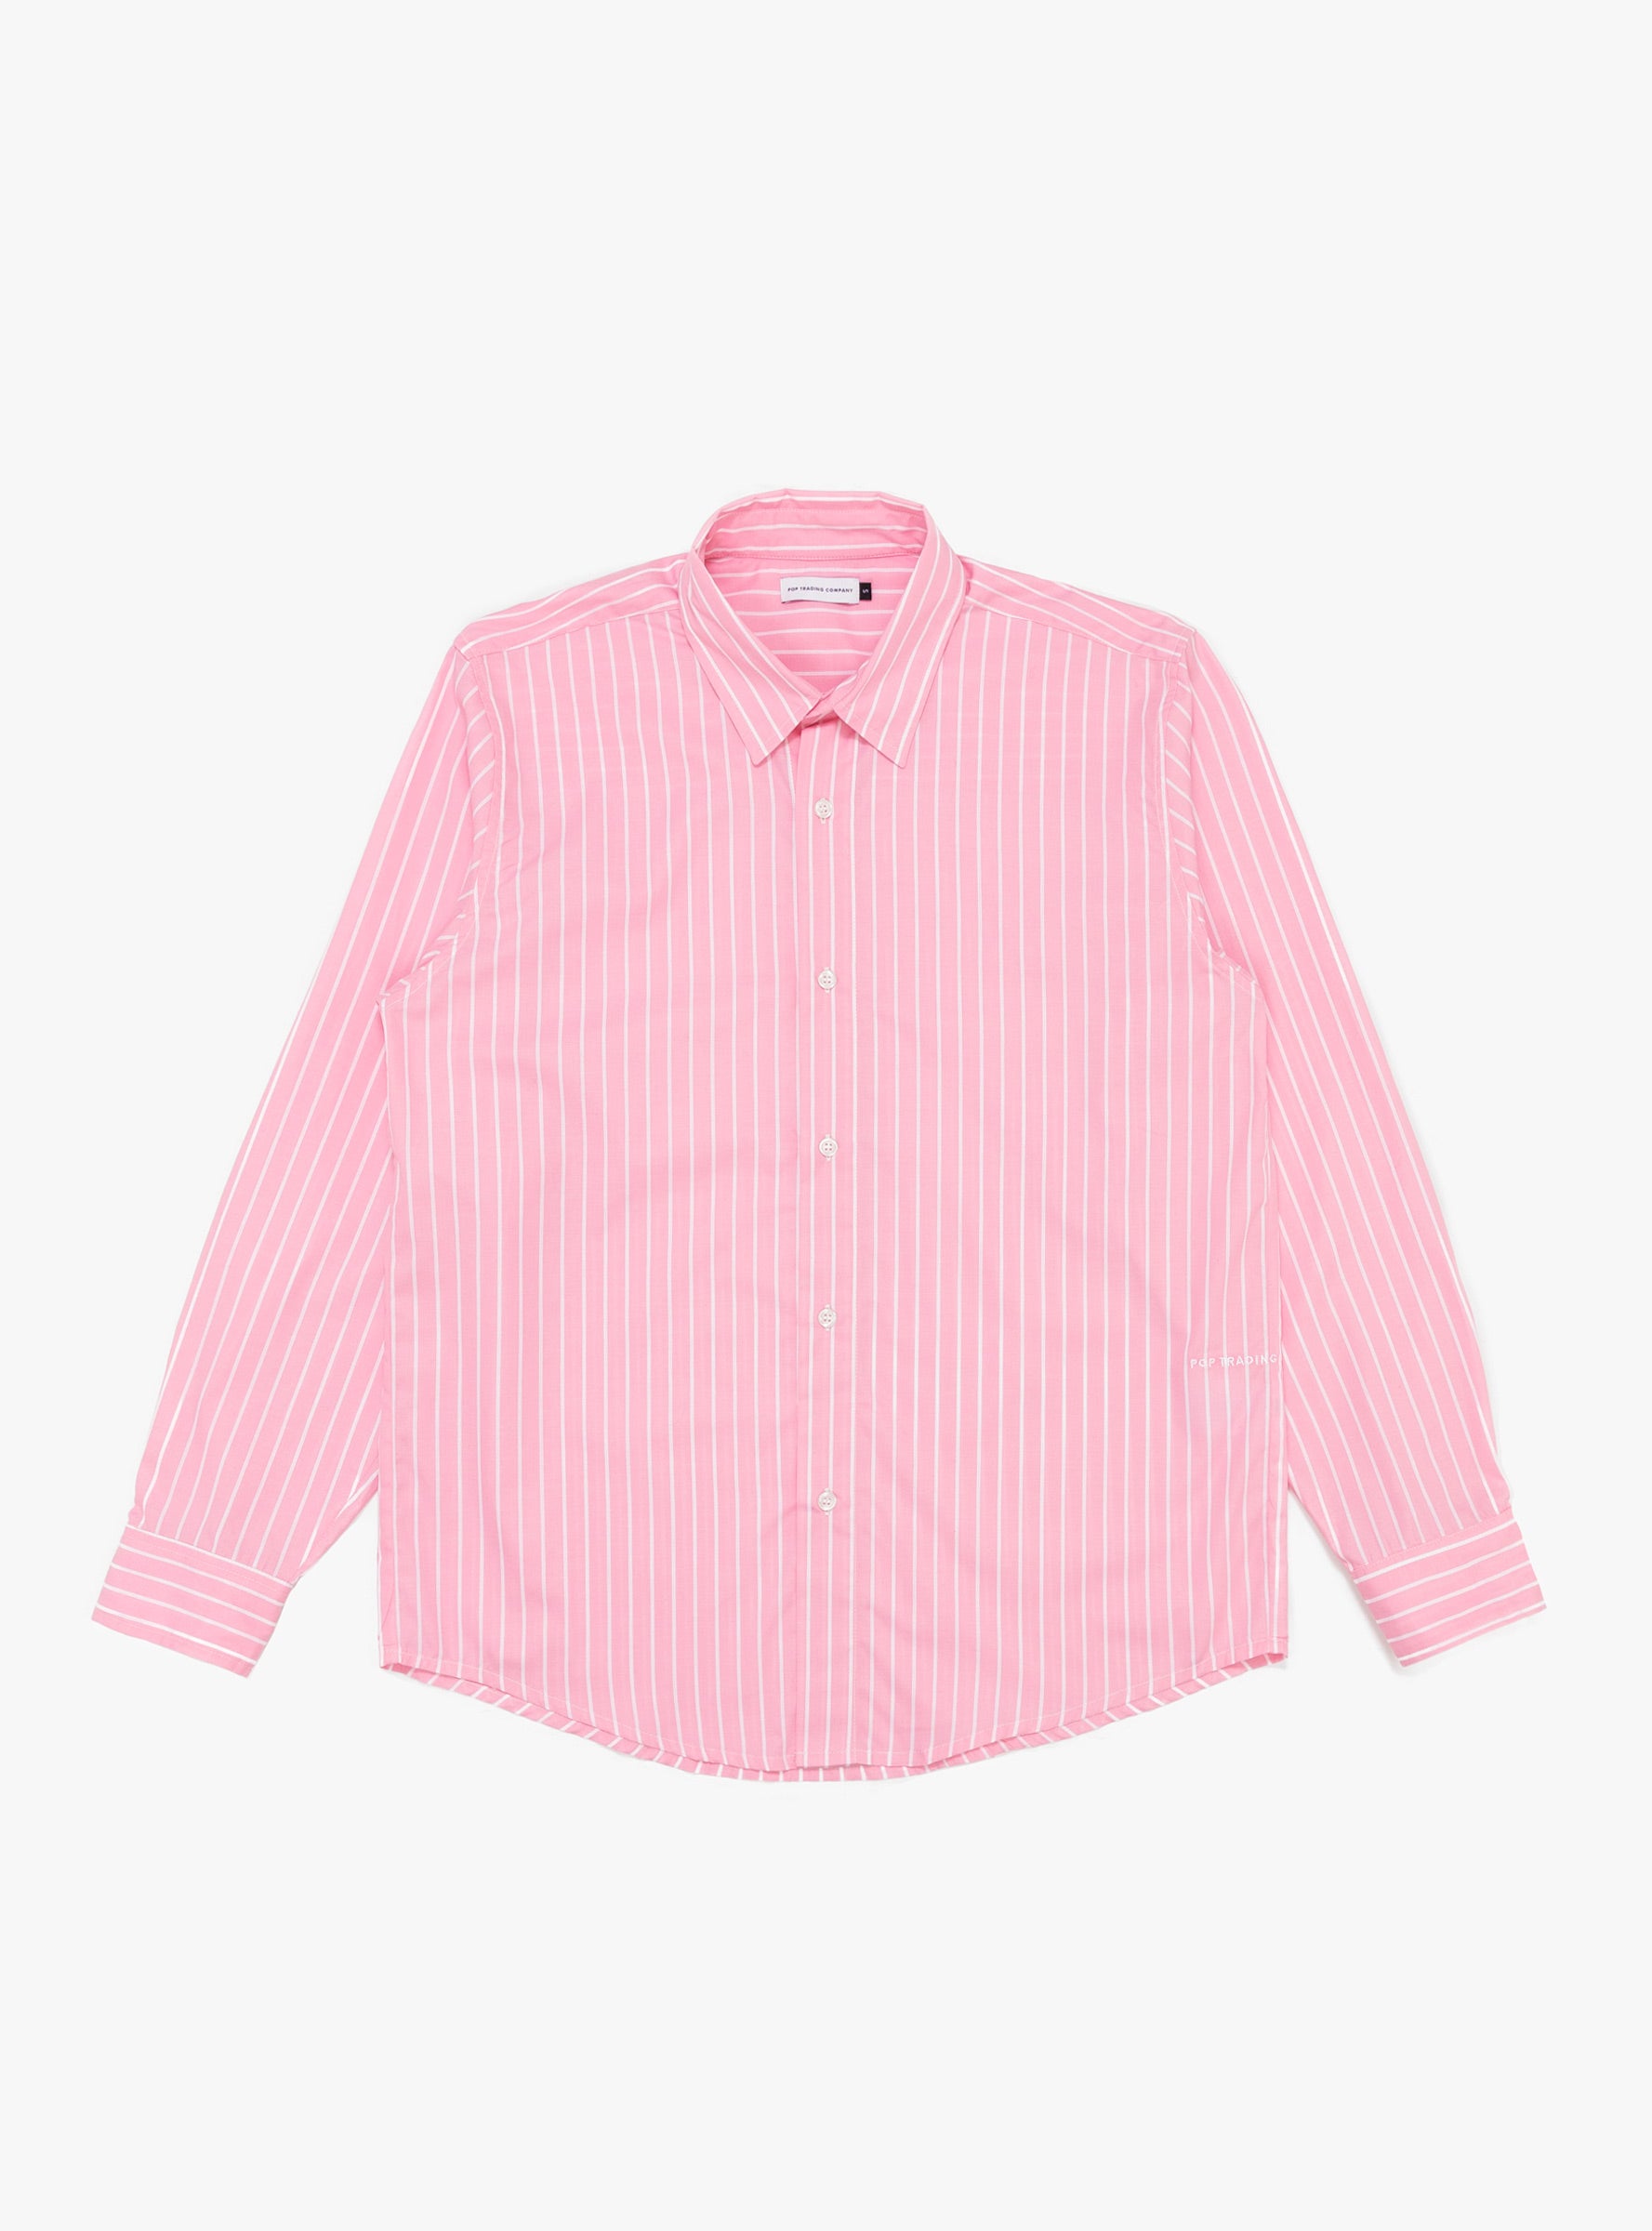 Pop Trading Company Pop Trading Company Logo Striped Shirt Pink - Size: Large